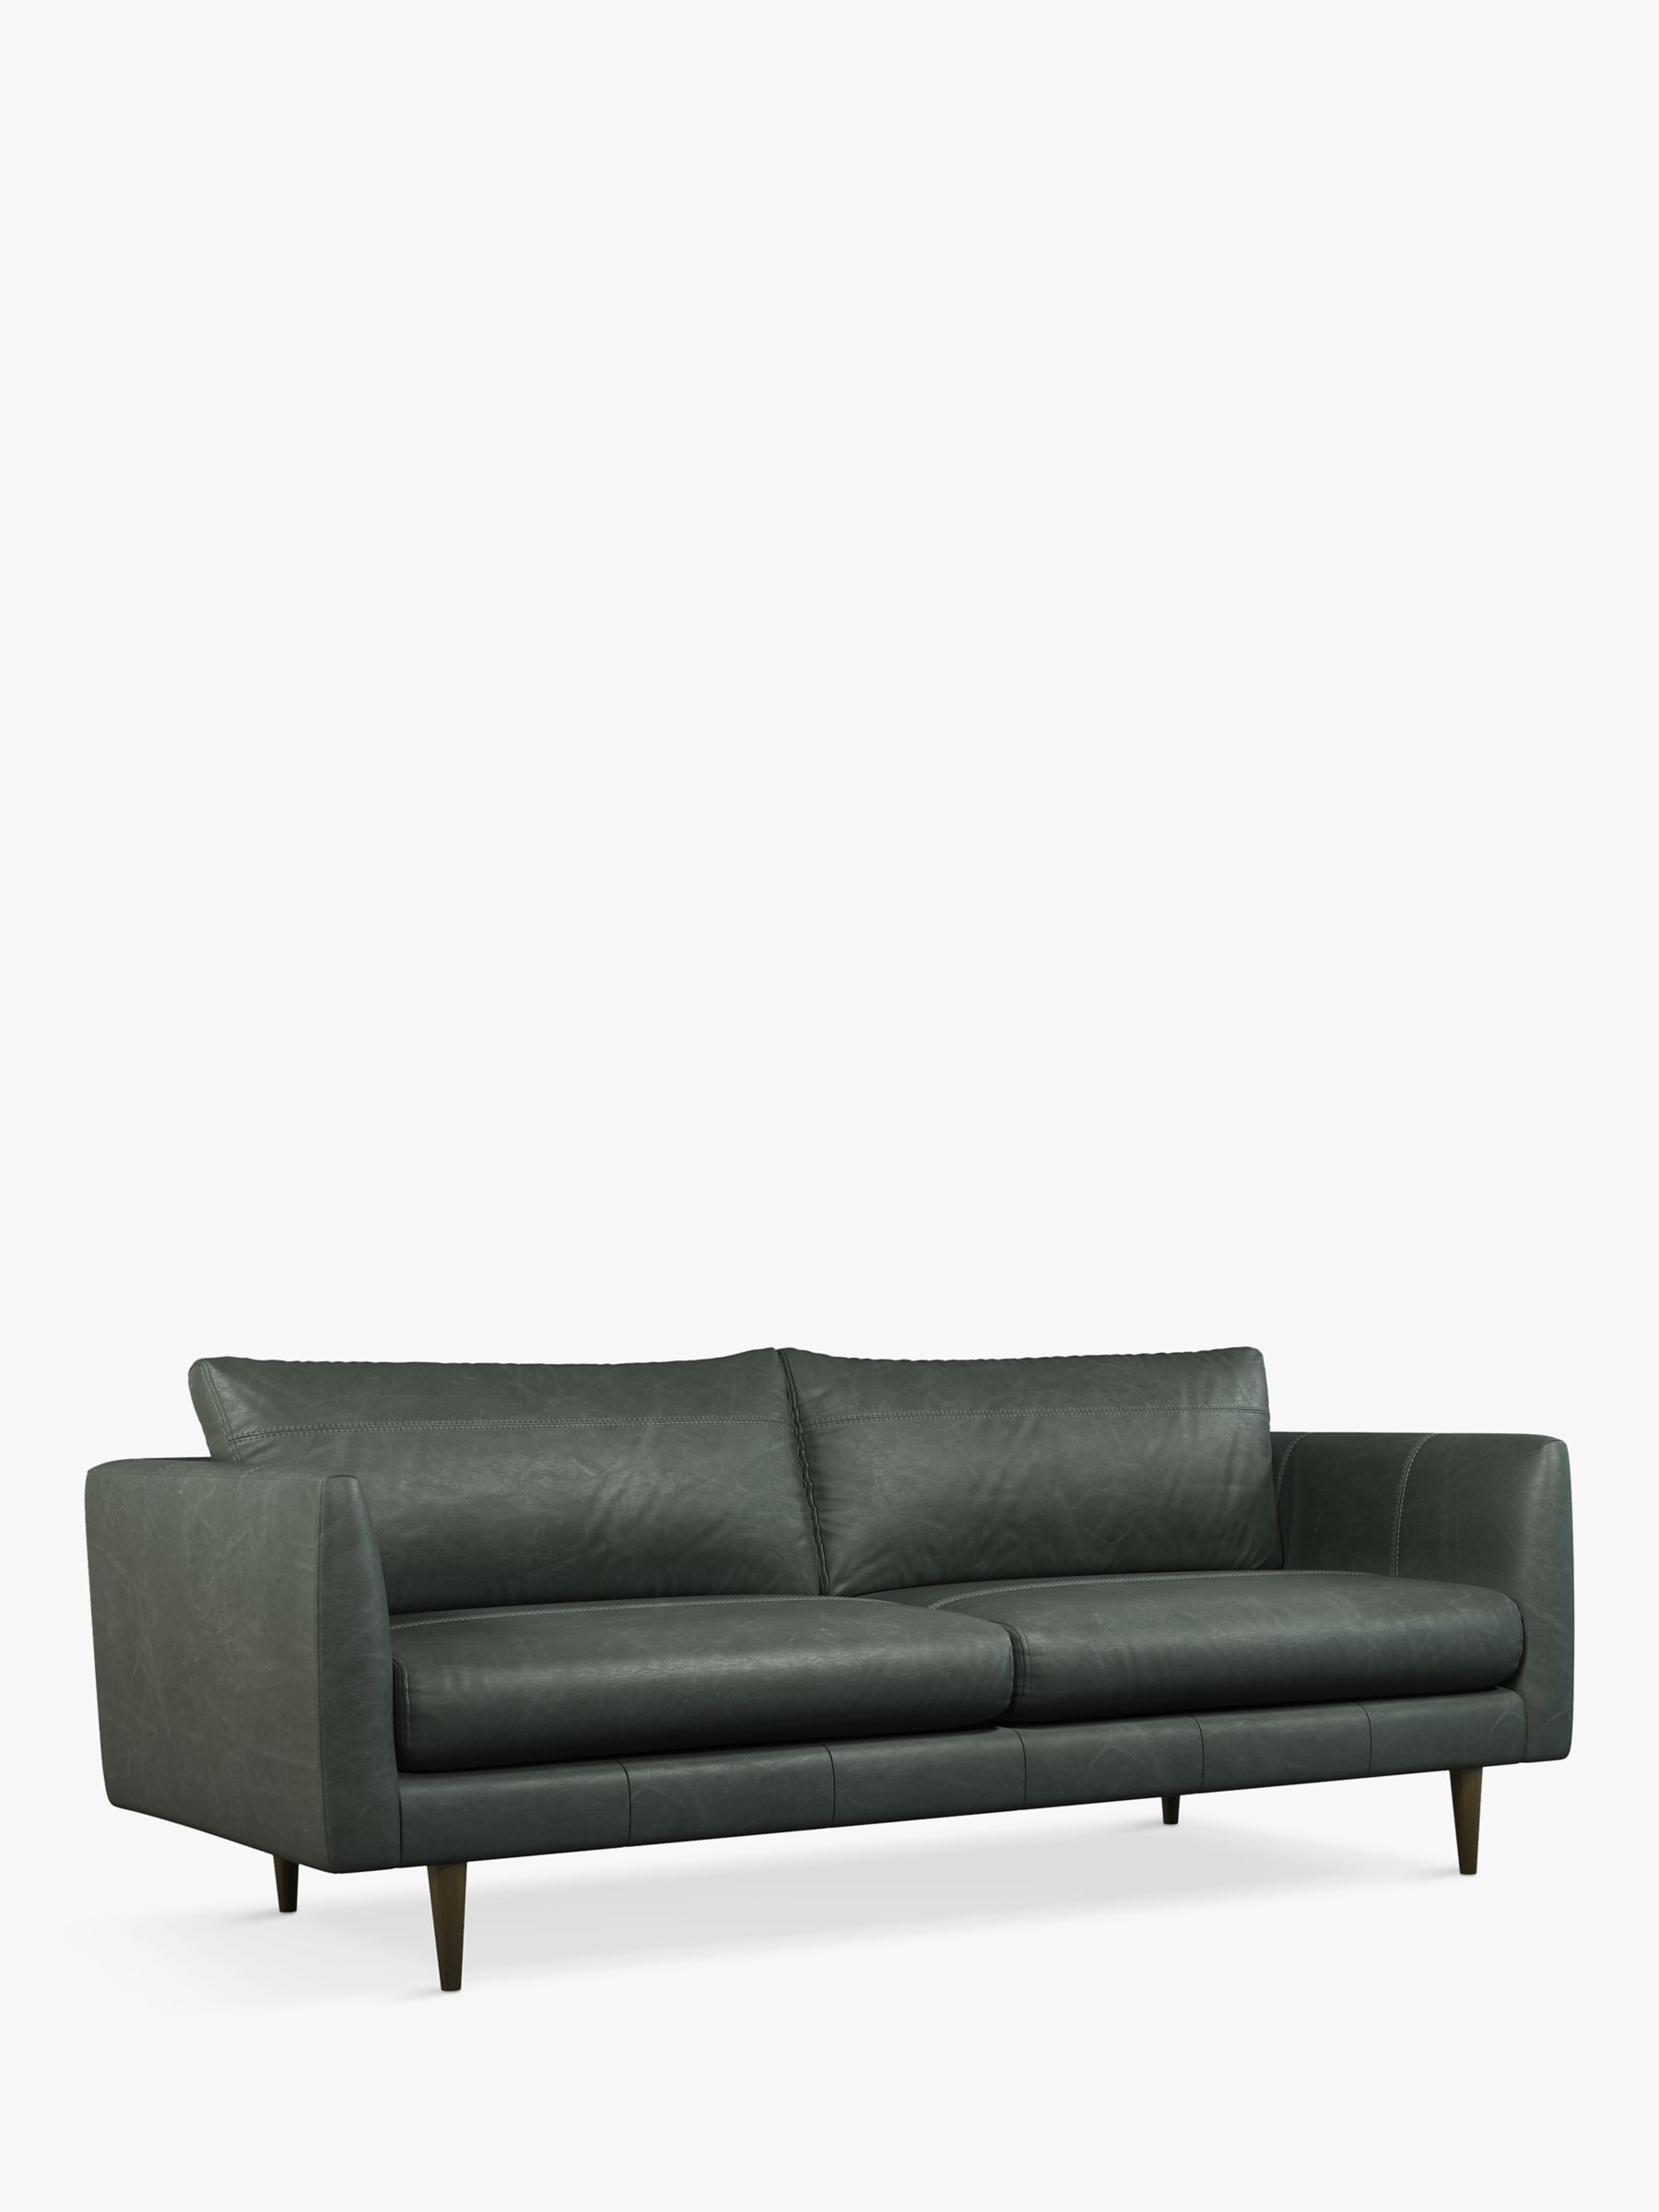 Latimer Range, John Lewis + Swoon Latimer Large 3 Seater Leather Sofa, Sellvagio Green